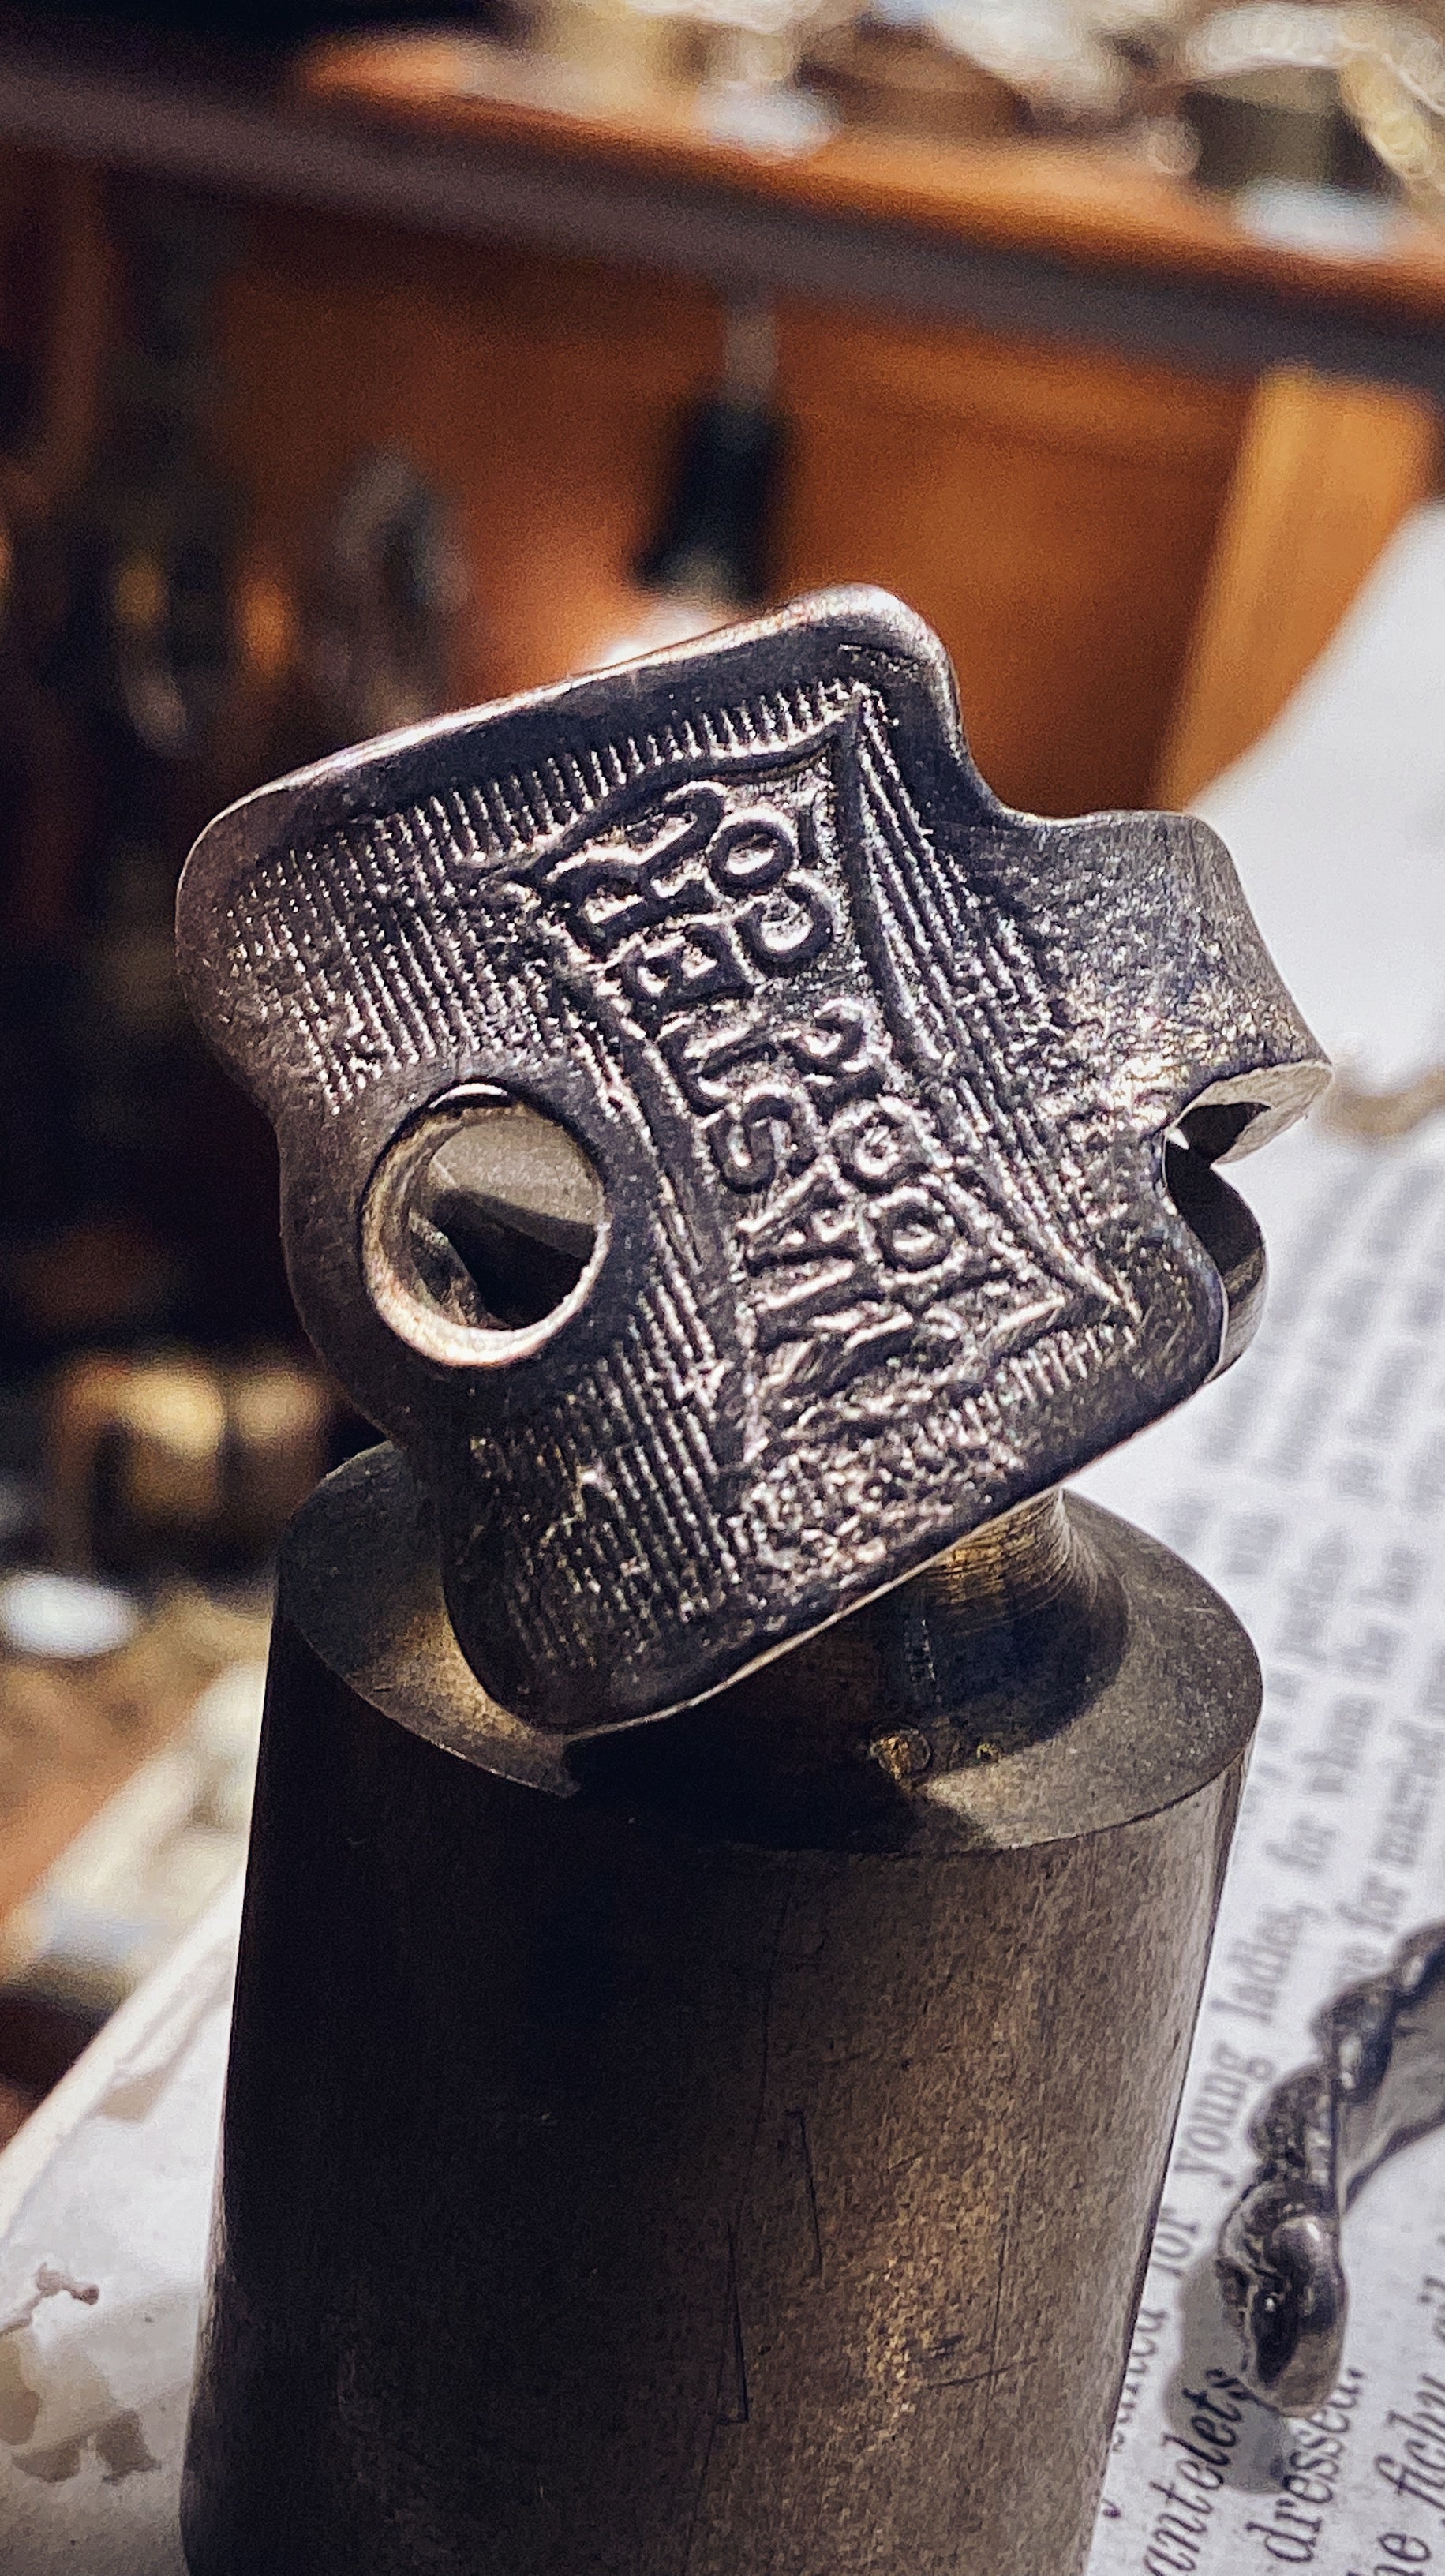 Vintage Silver Key Ring (Master Lock)